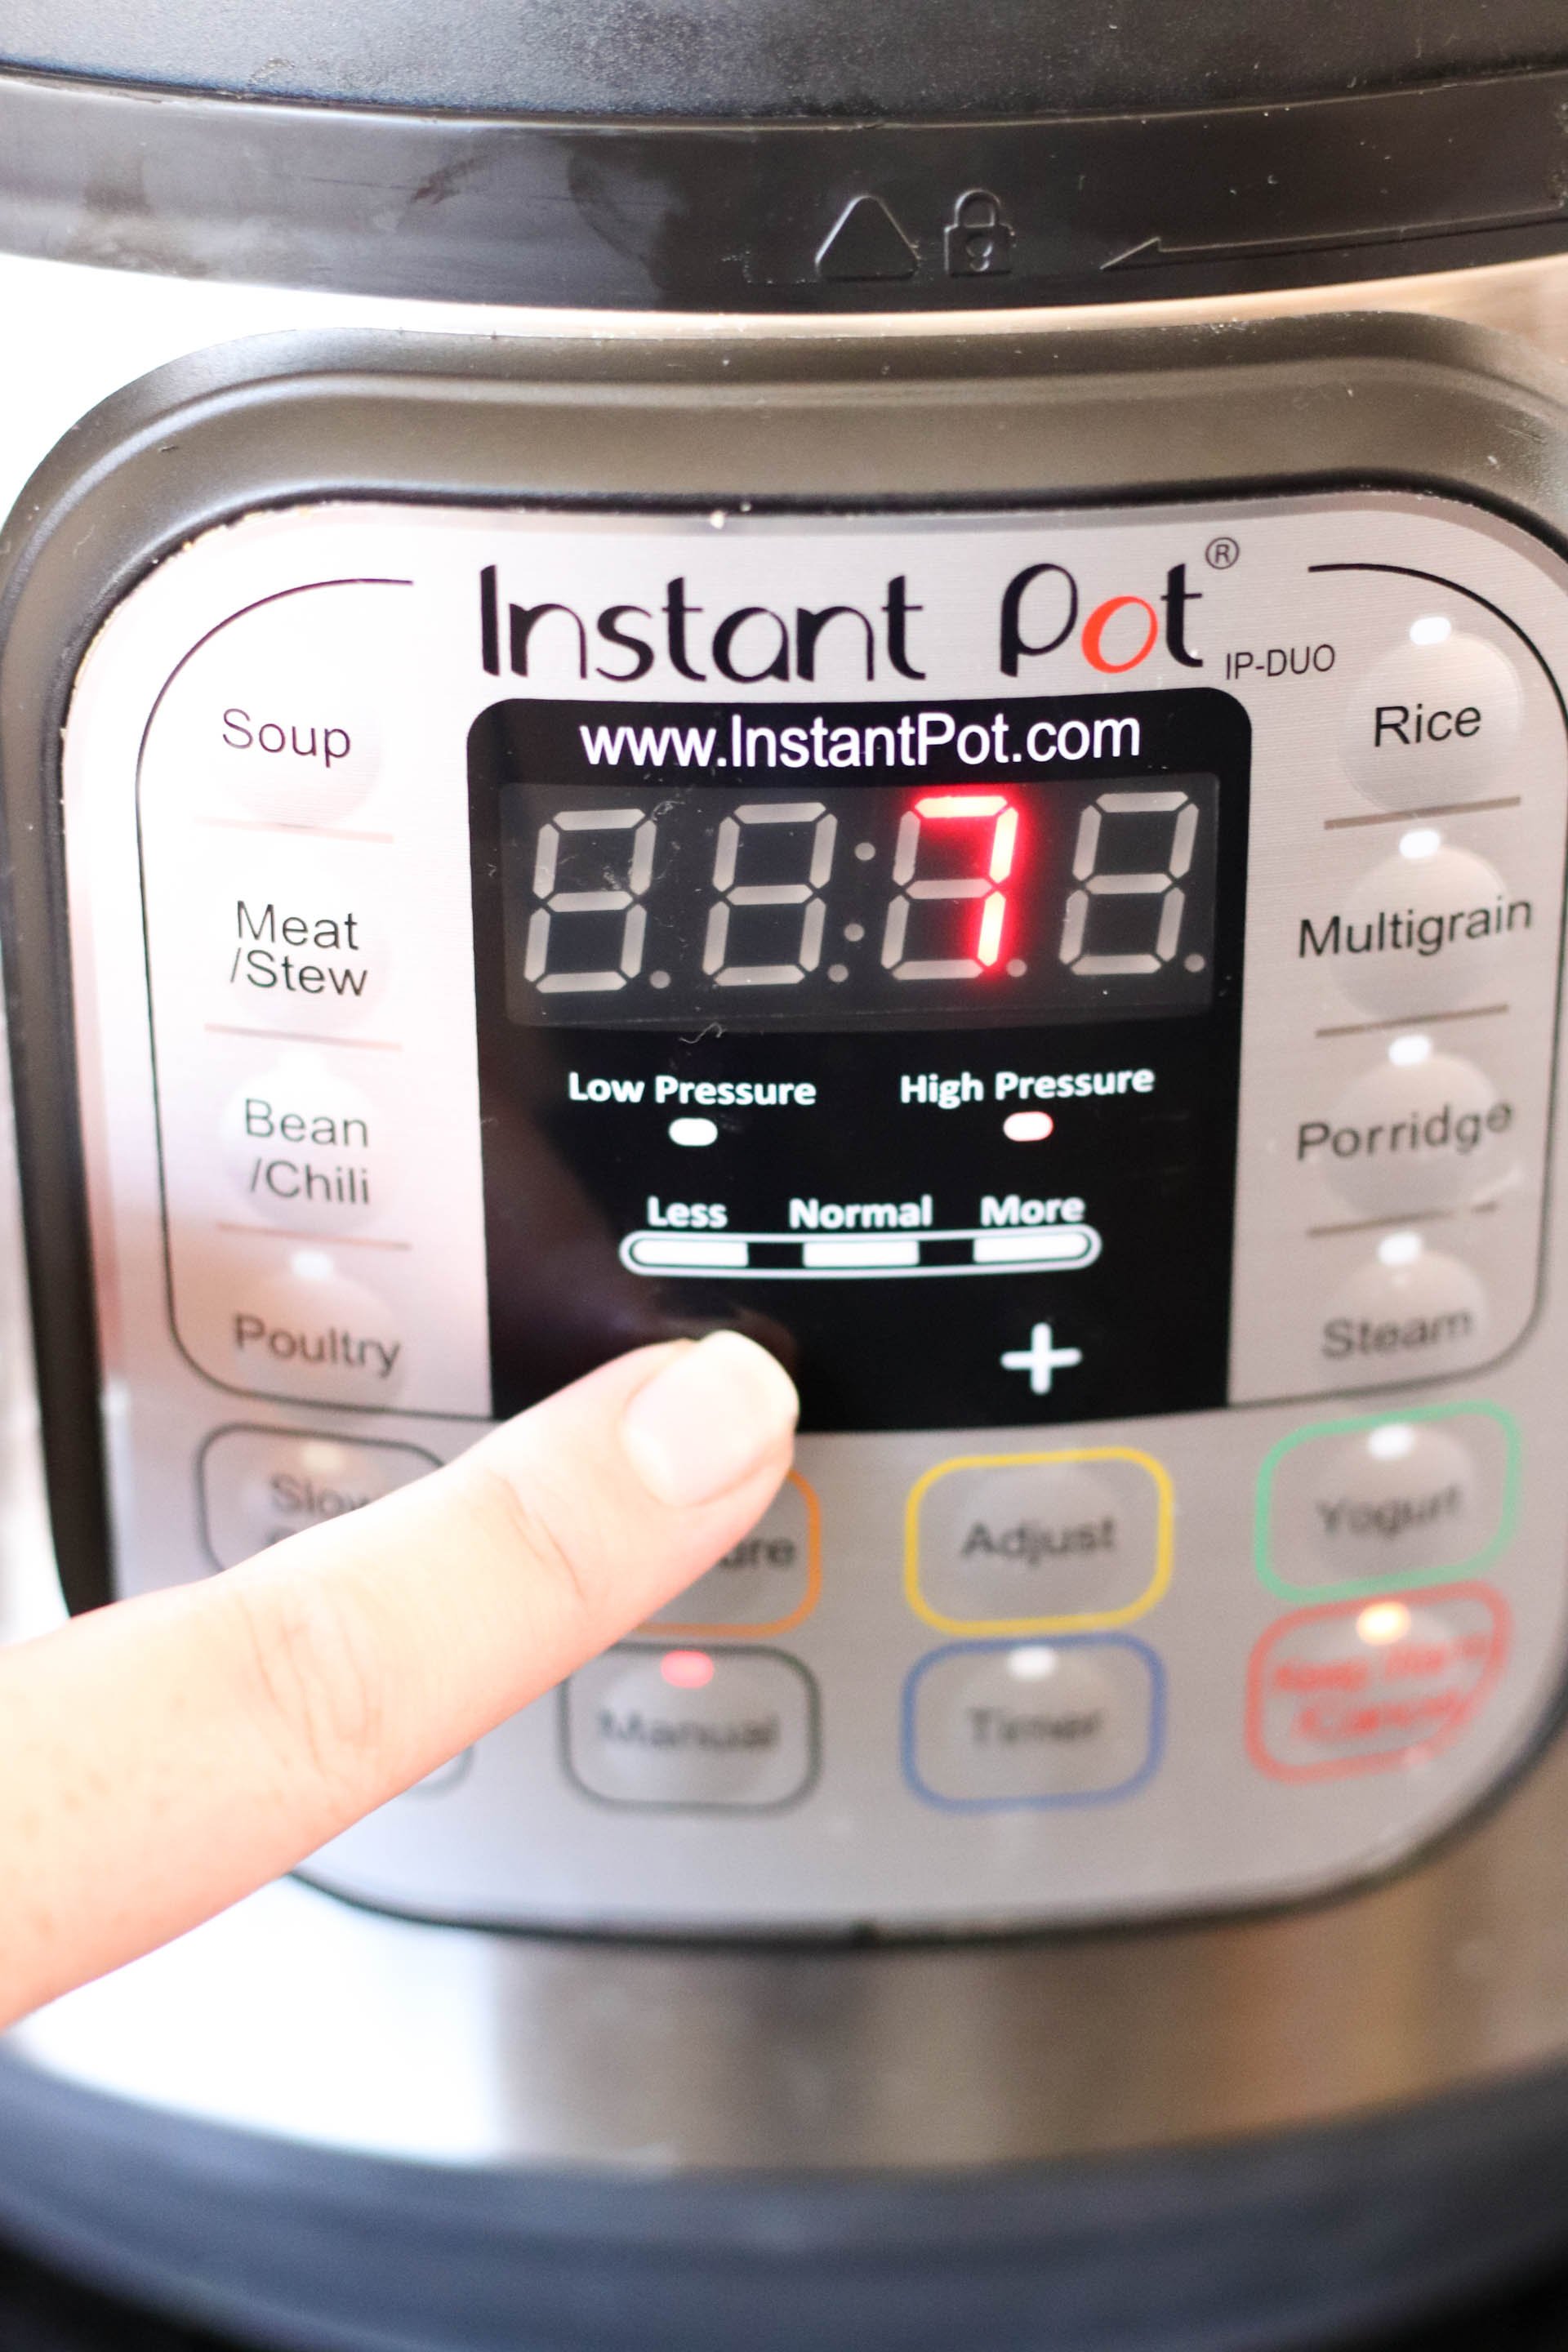 Set Instant Pot timer to 7 minutes